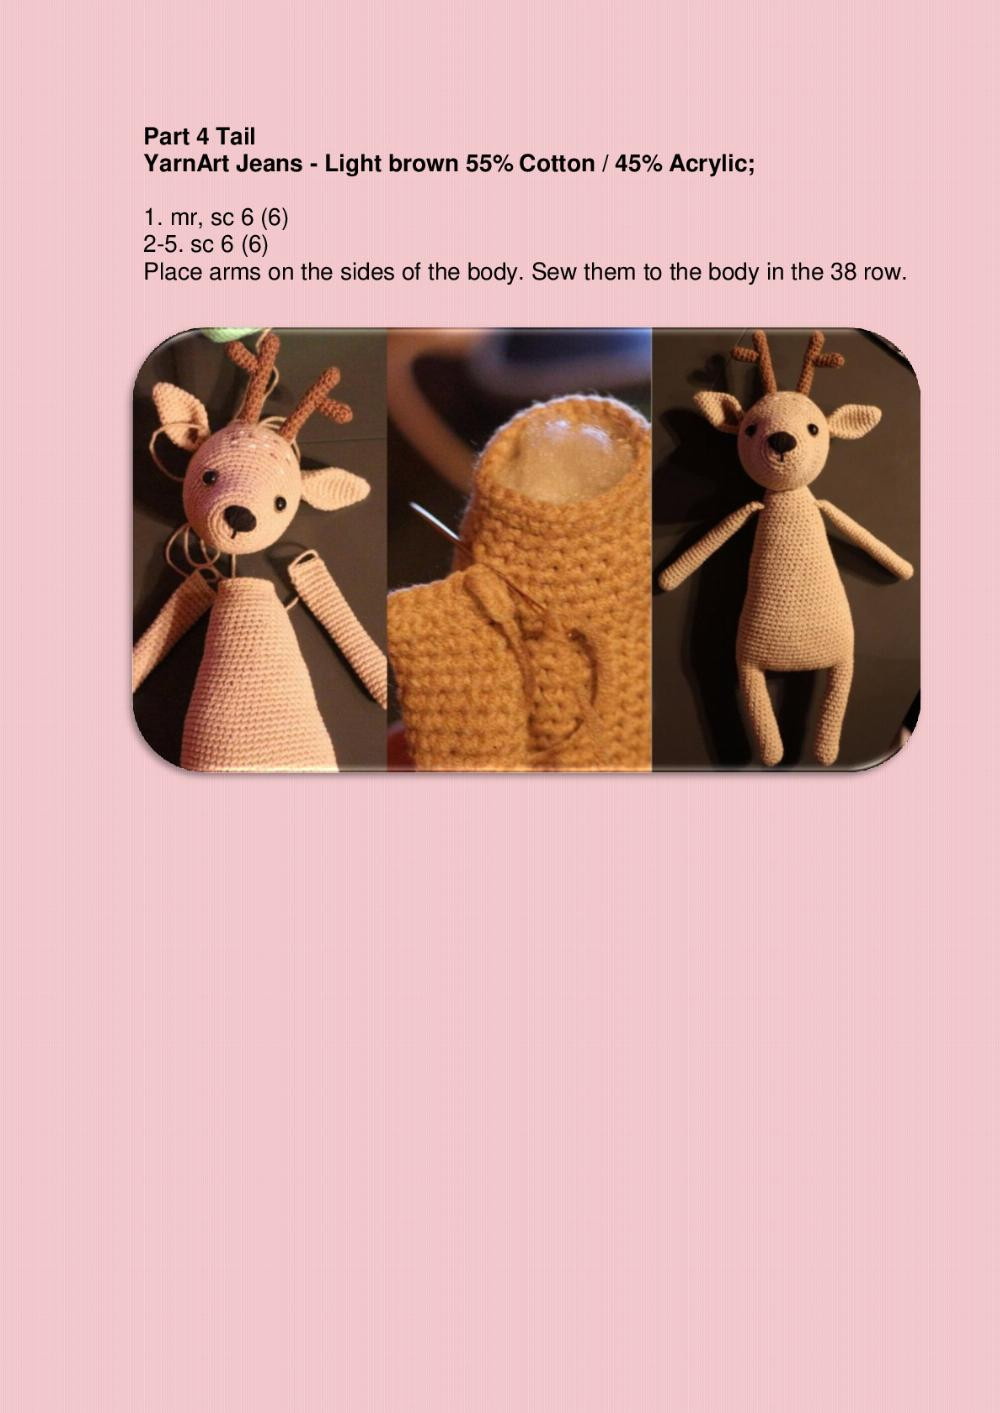 Toys of Dreams Pattern Crochet Deer